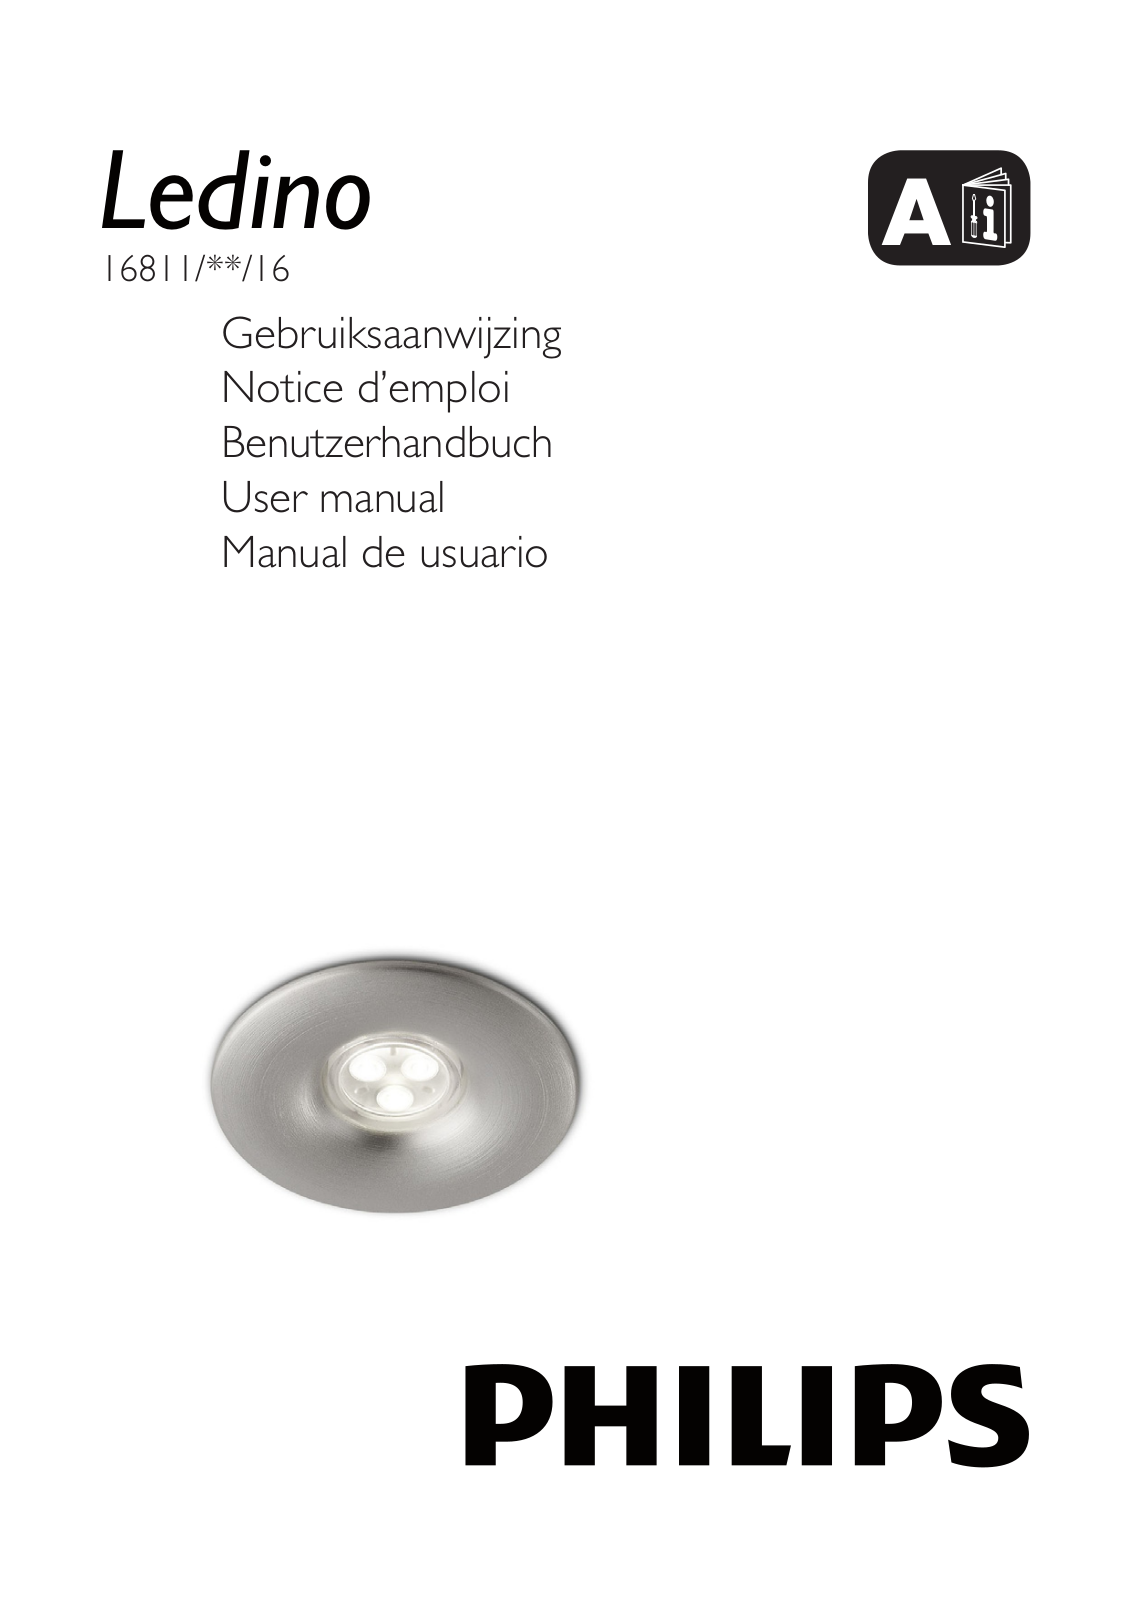 Philips Ledino Einbauspot User Manual